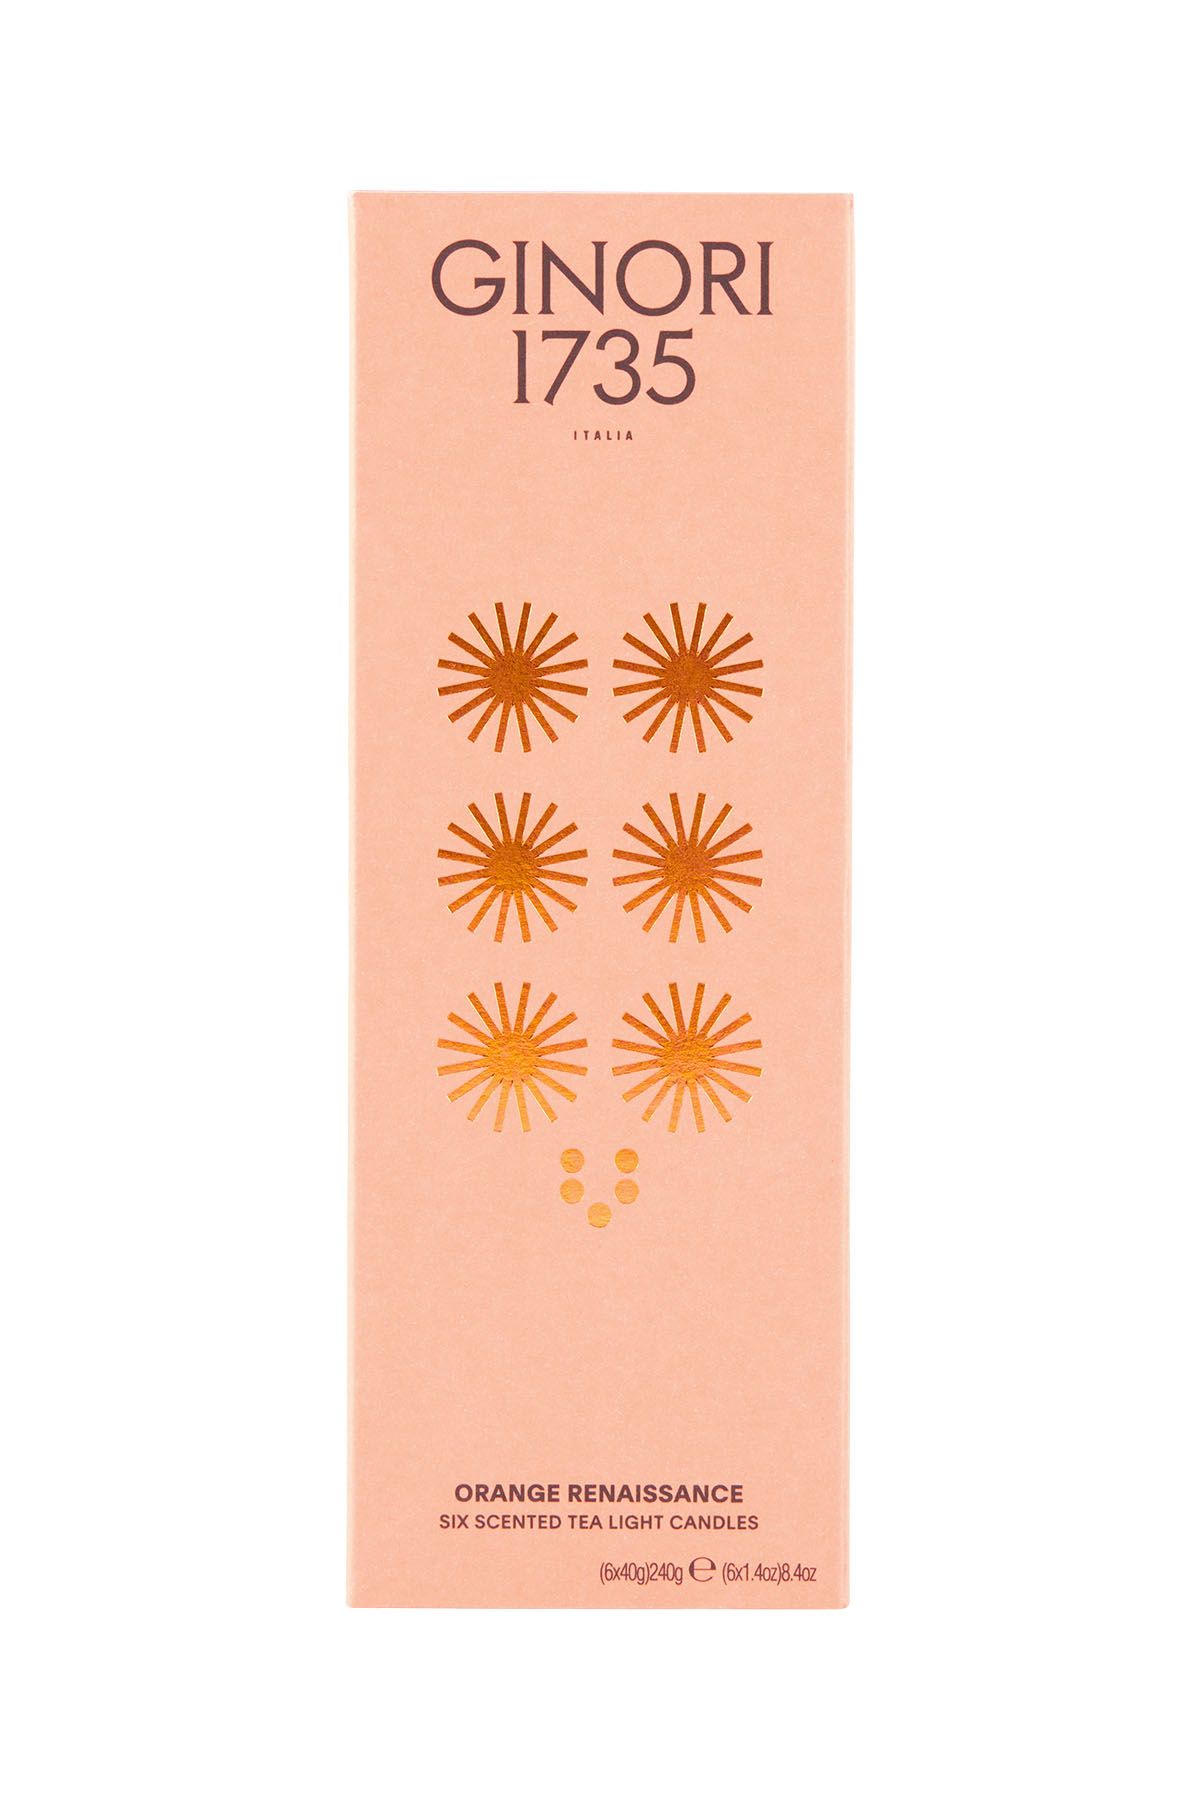 GINORI 1735 orange renaissance scented tea light candles refill